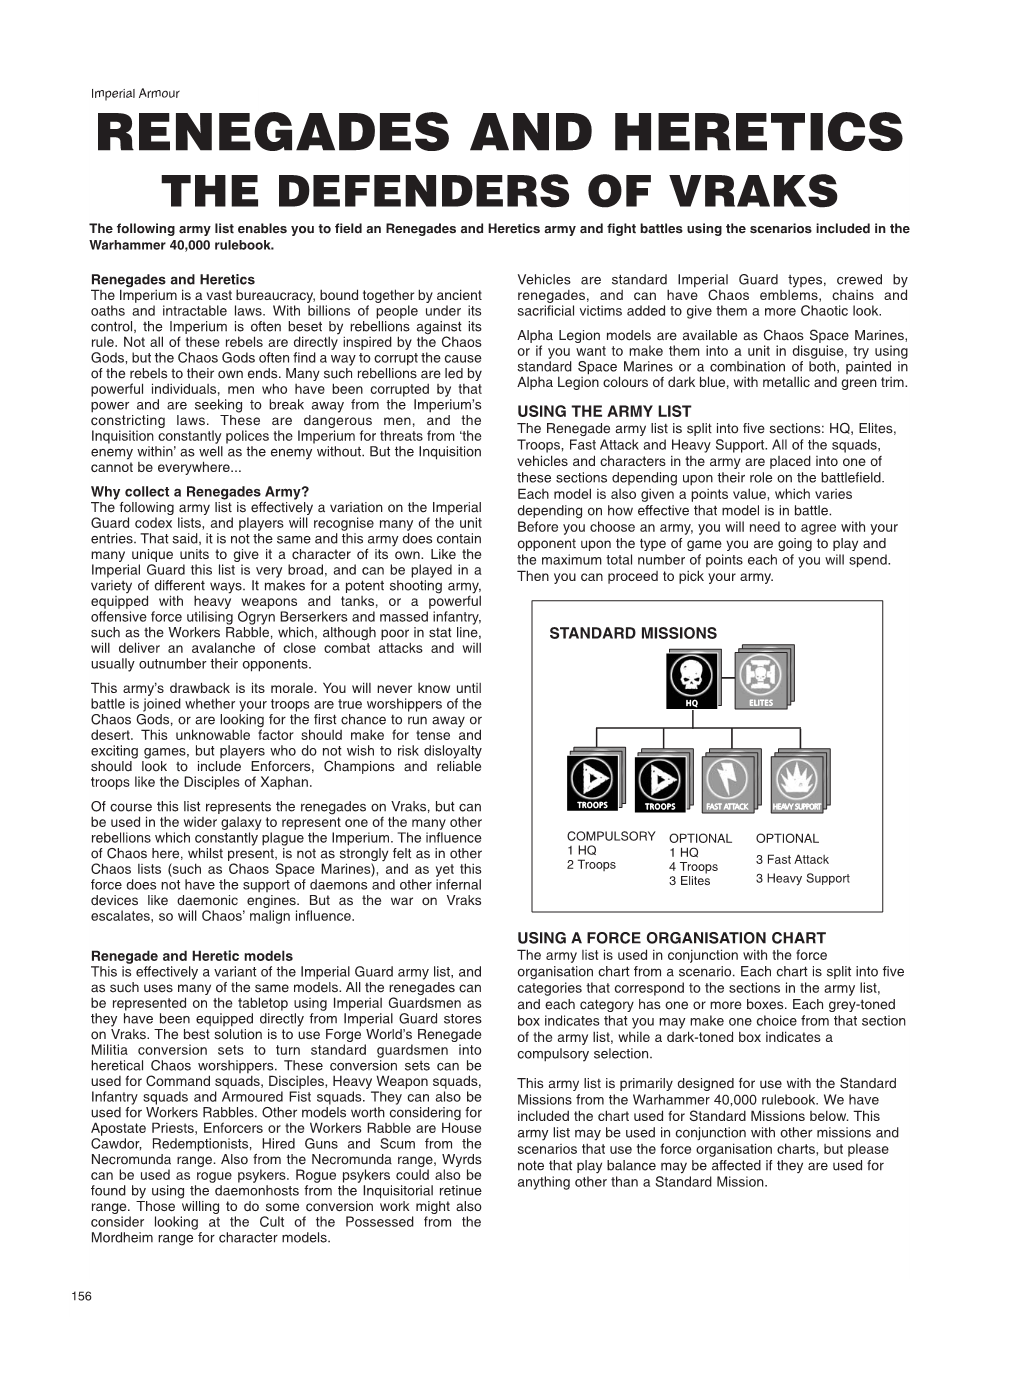 Renegades and Heretics the Defenders of Vraks